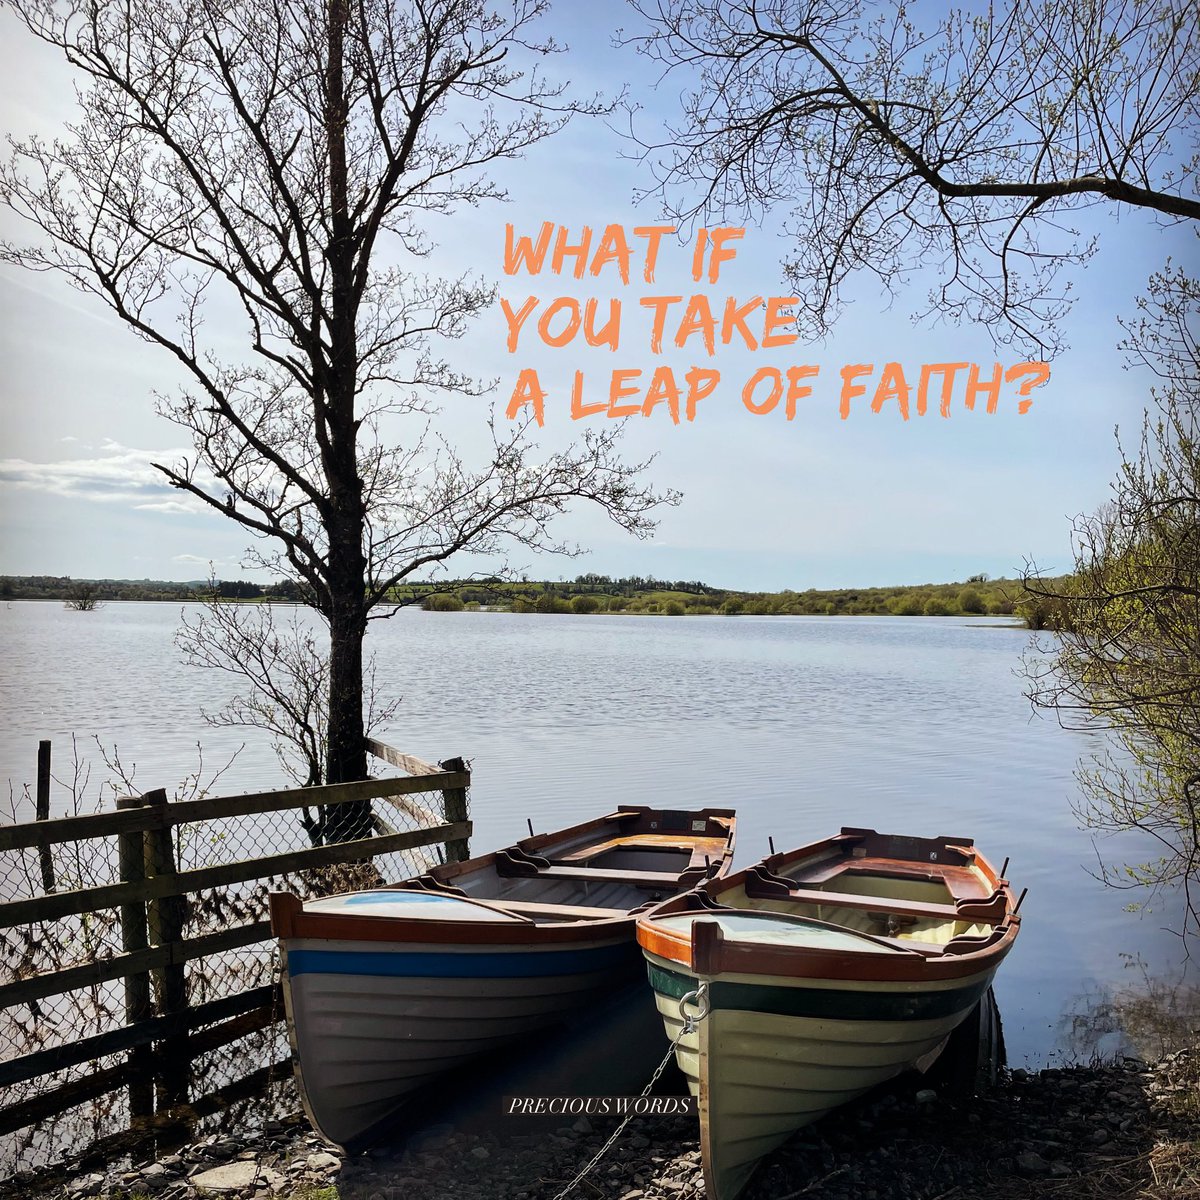 What if you take a leap of faith?
#whatif #leapoffaith #preciouswordsoflife #preciouswordstoliveby #preciouswords